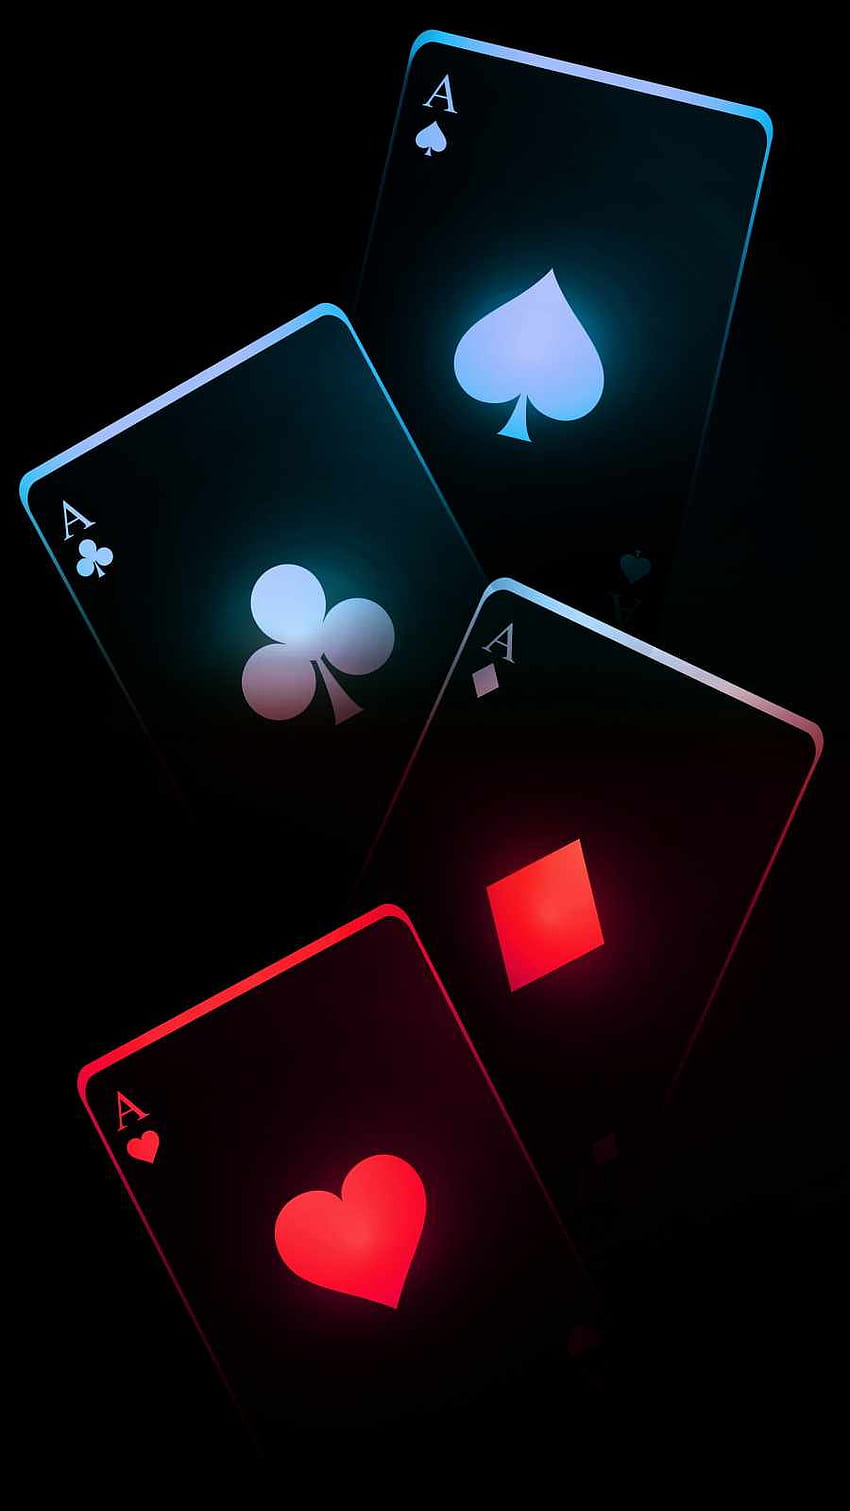 JOKERShow your Master Card  Joker wallpapers Android wallpaper dark  Color splash photography